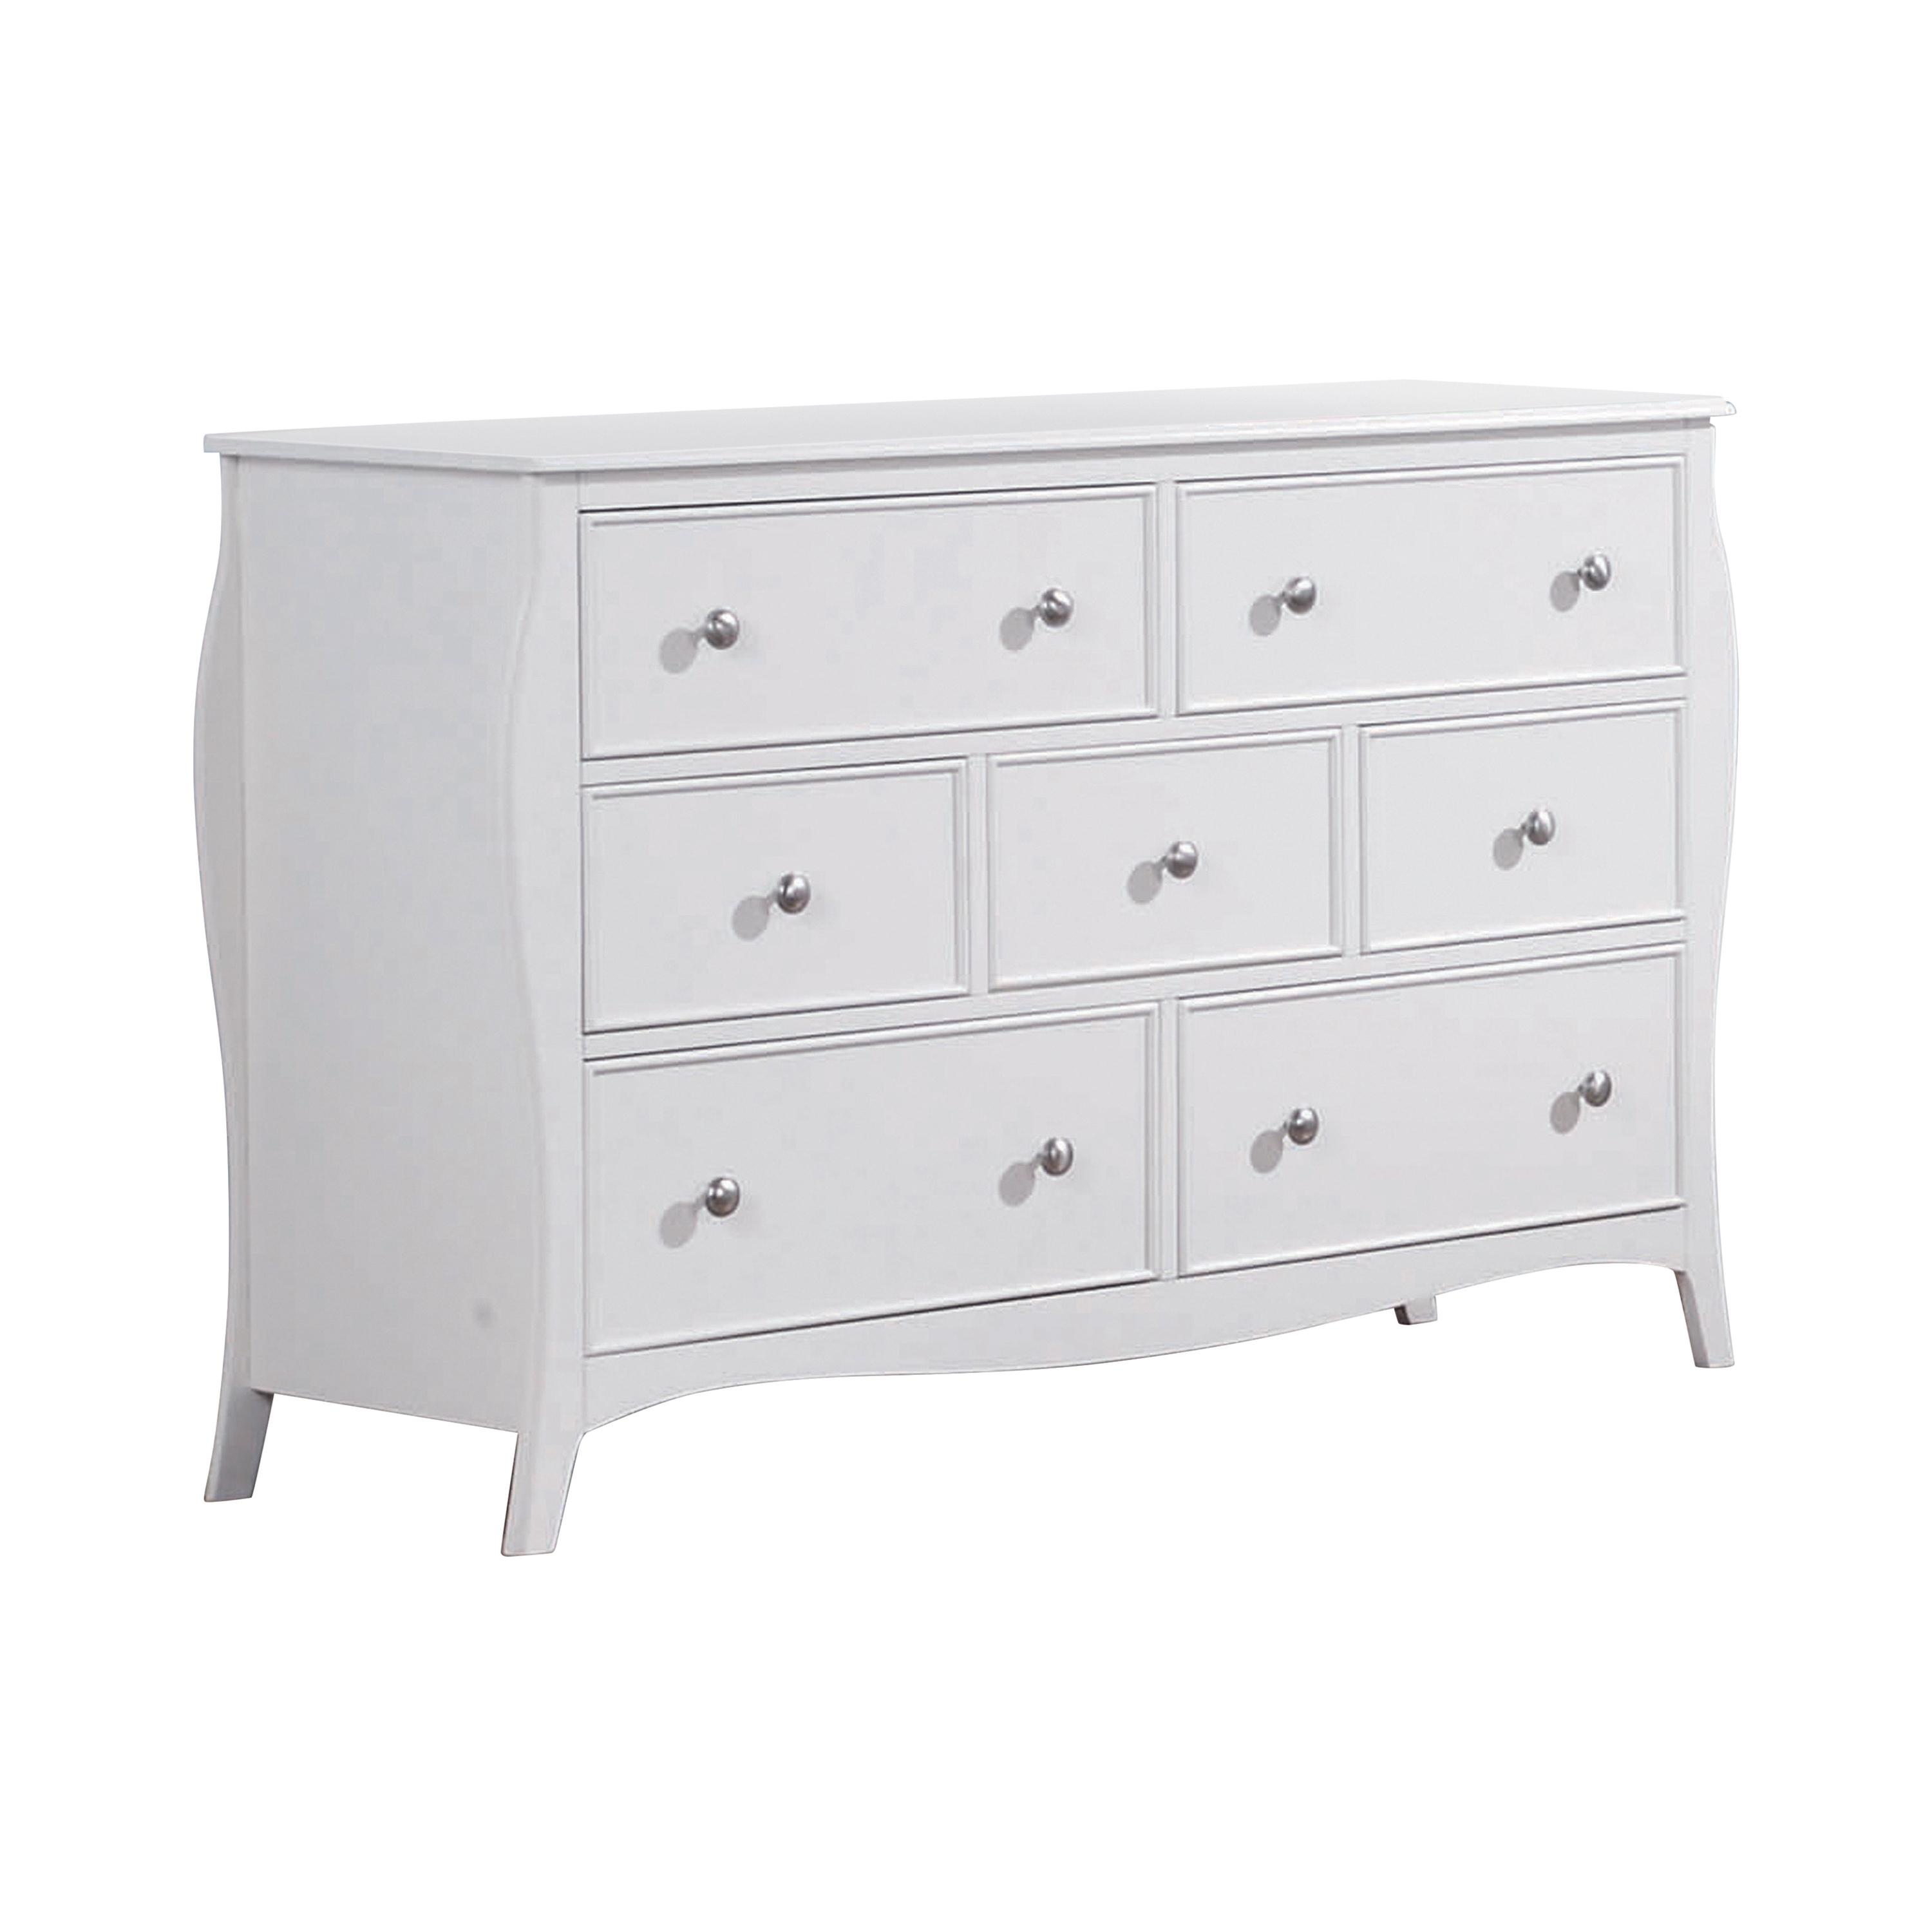 Traditional Dresser 400563 Dominique 400563 in White 